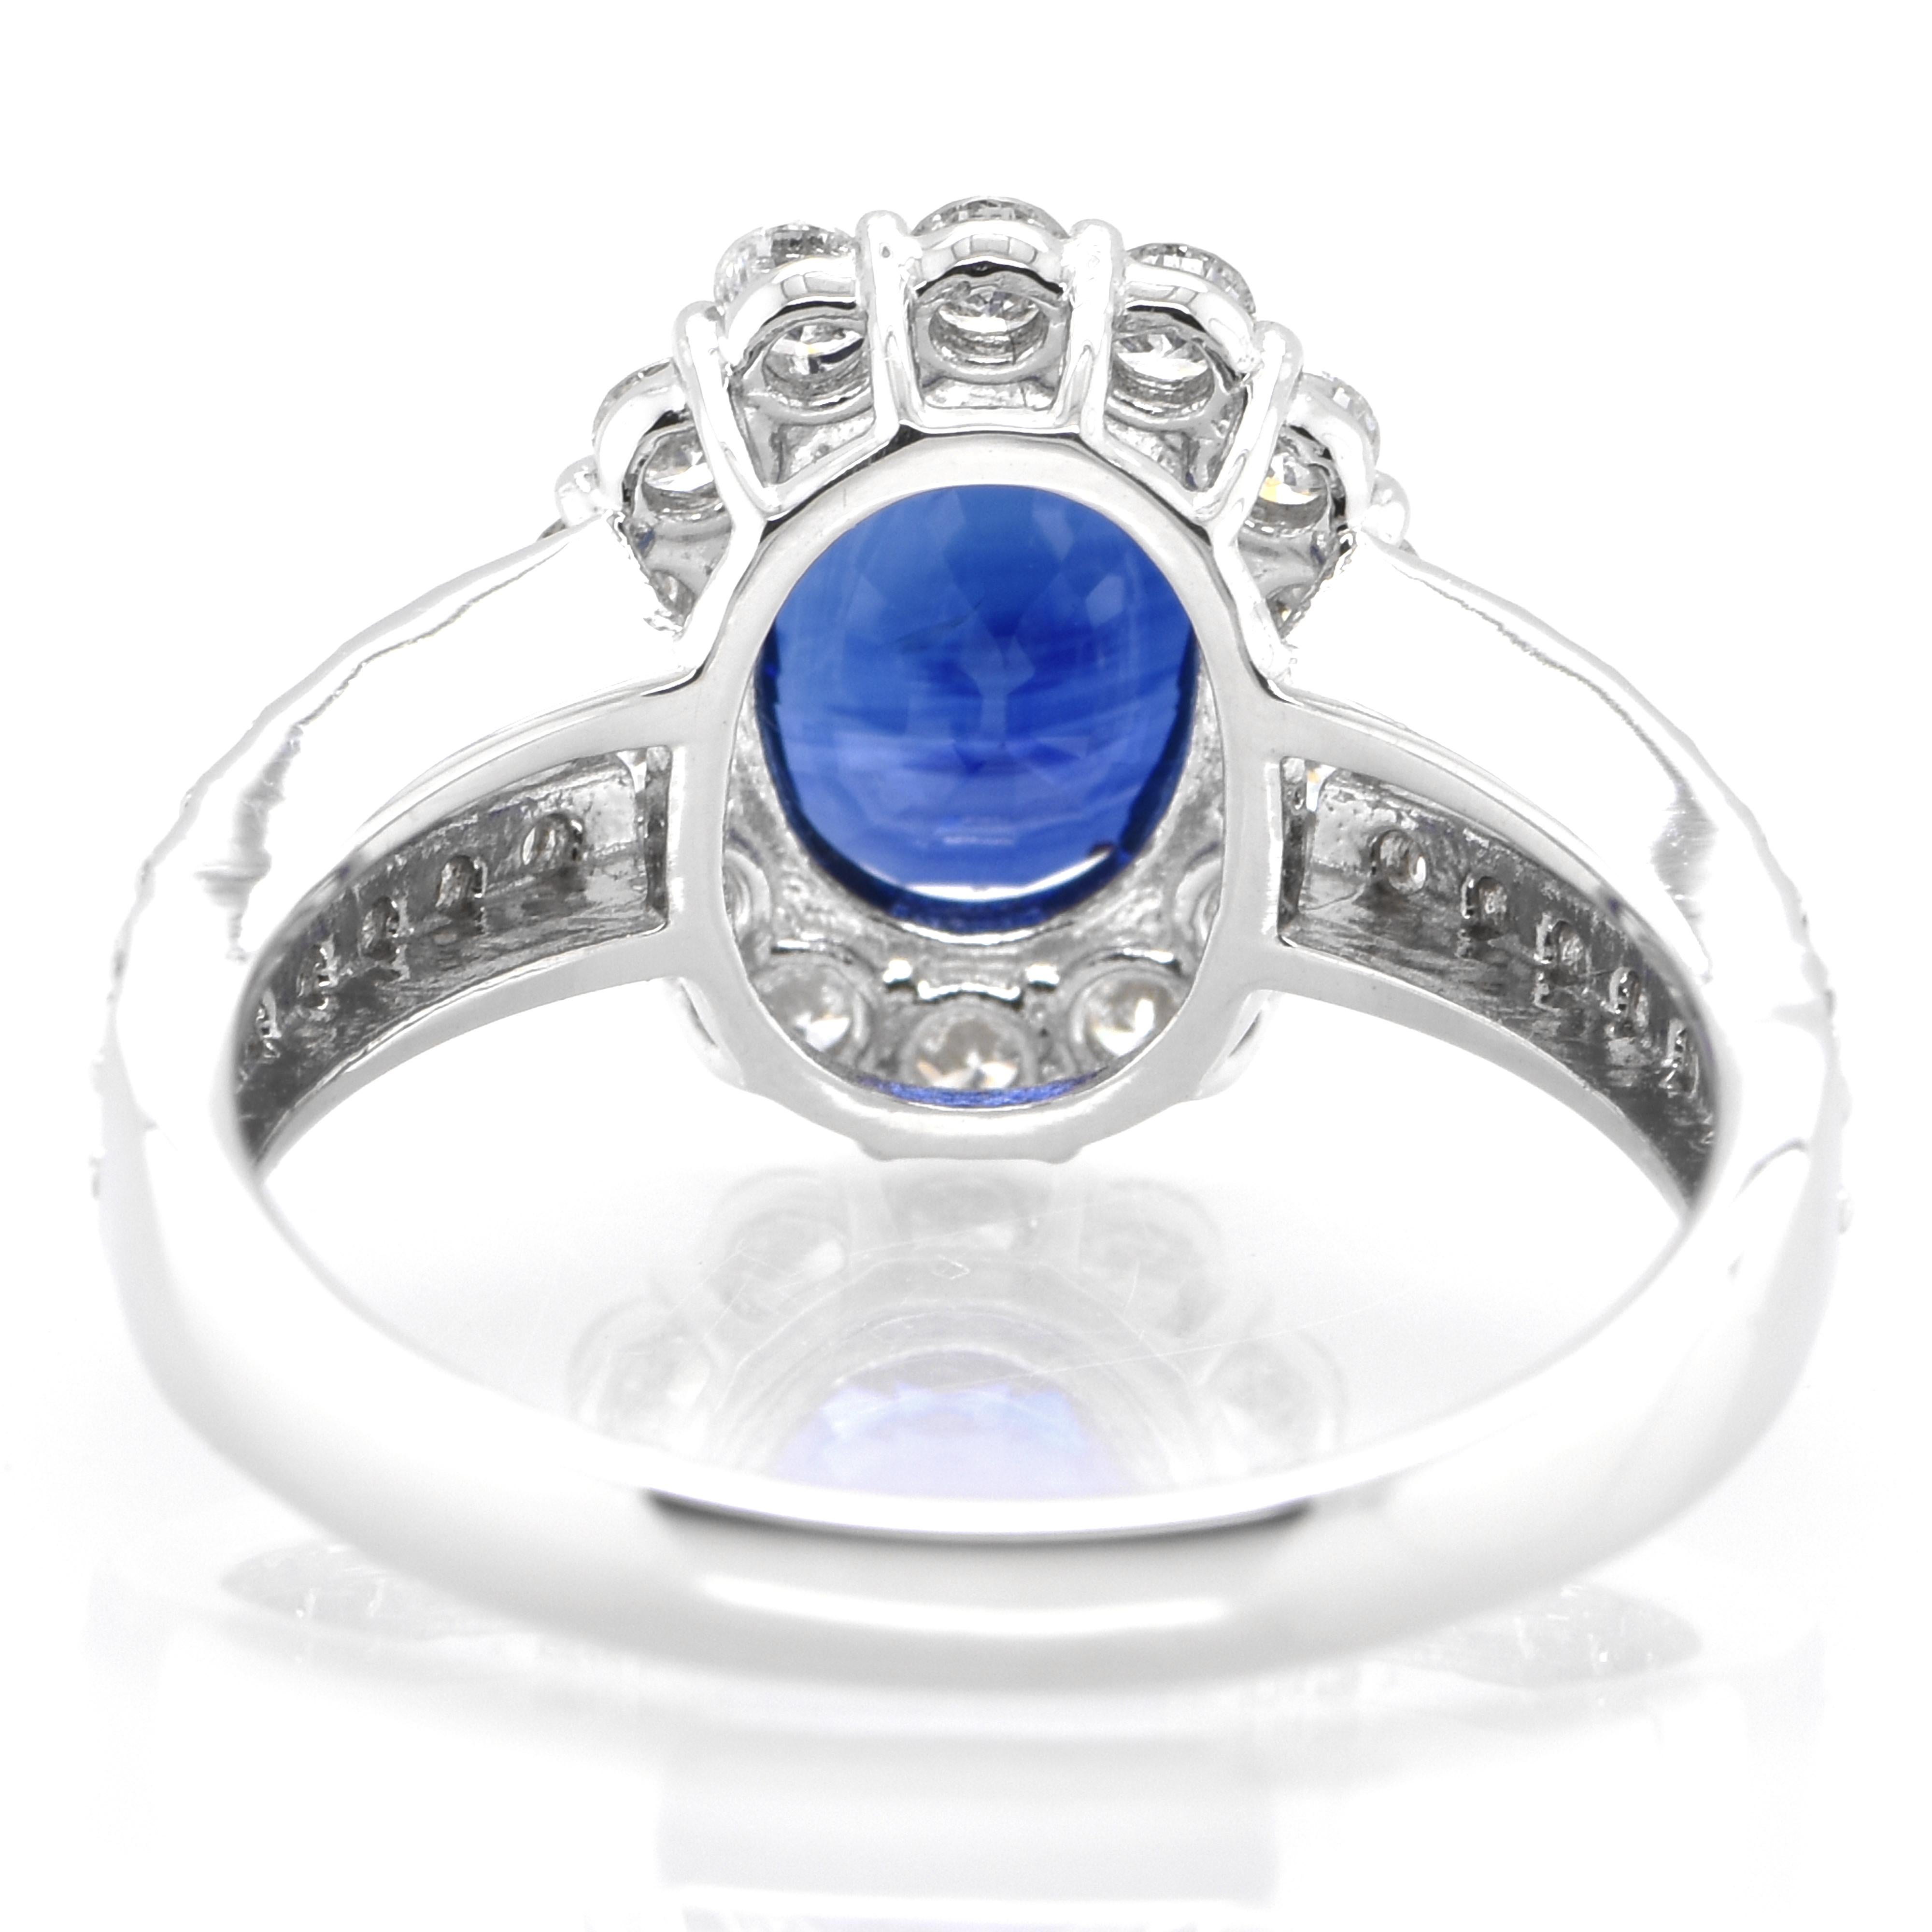 Women's GIA Certified 2.02 Carat Natural Ceylon Sapphire & Diamond Ring Set in Platinum